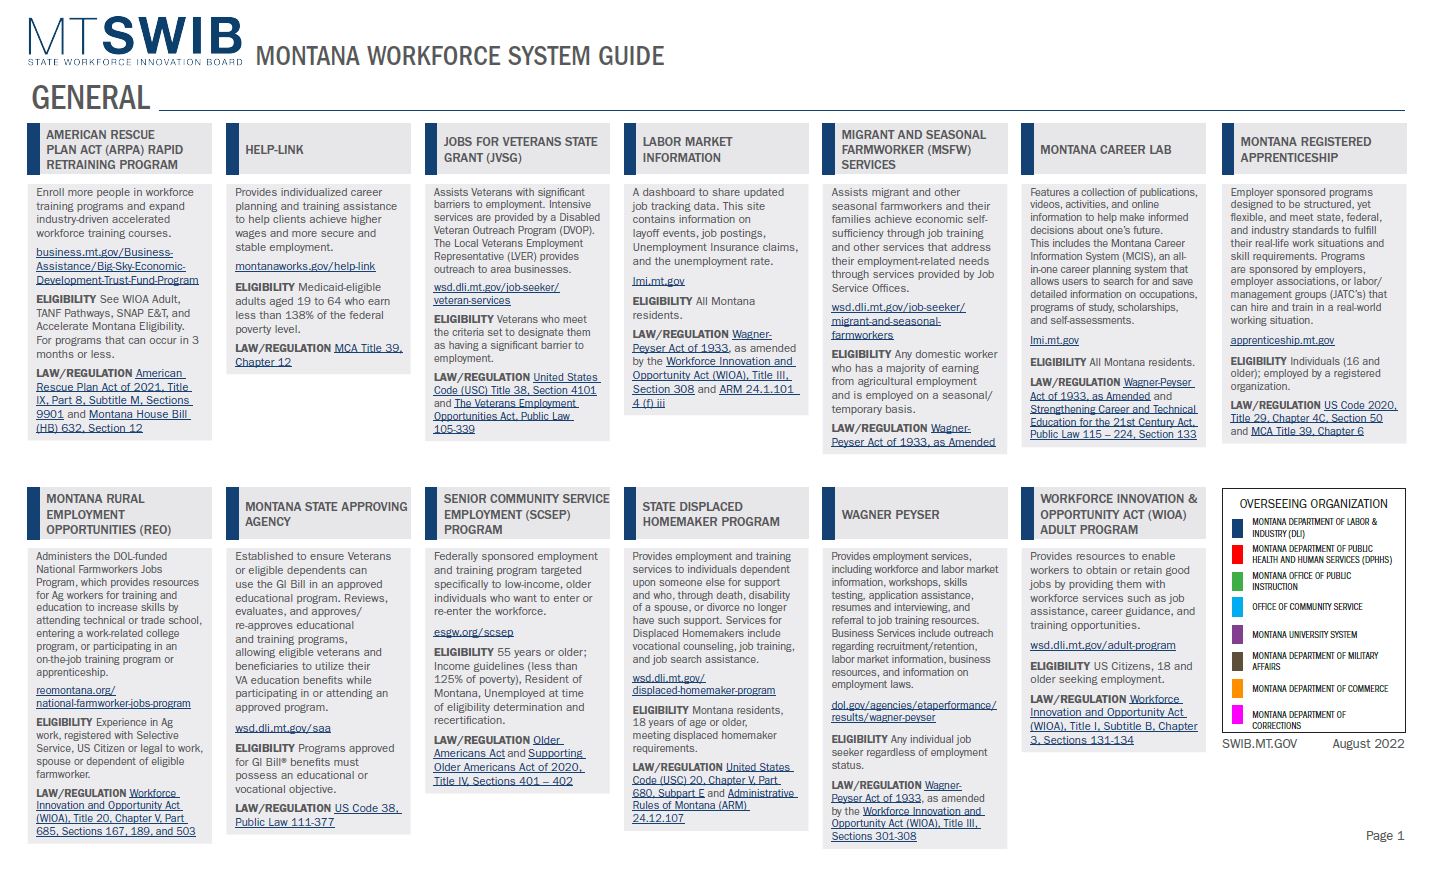 Workforce-System-Guide---Photo.JPG